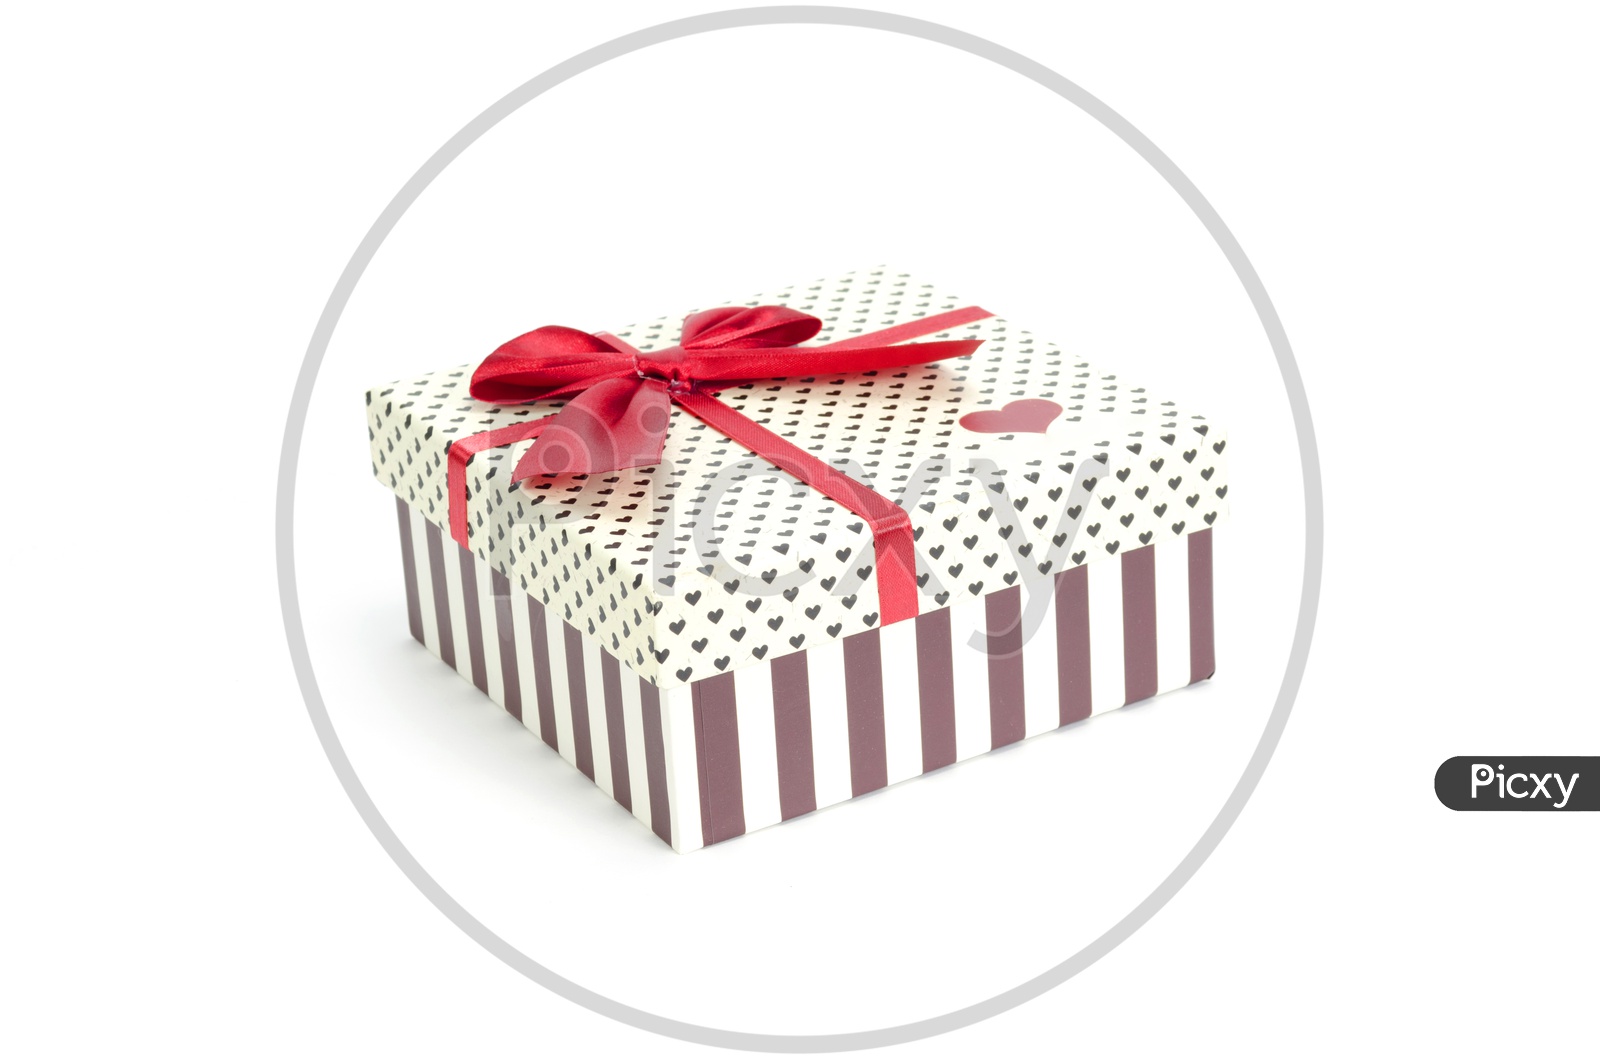 A Polka dot Gift box